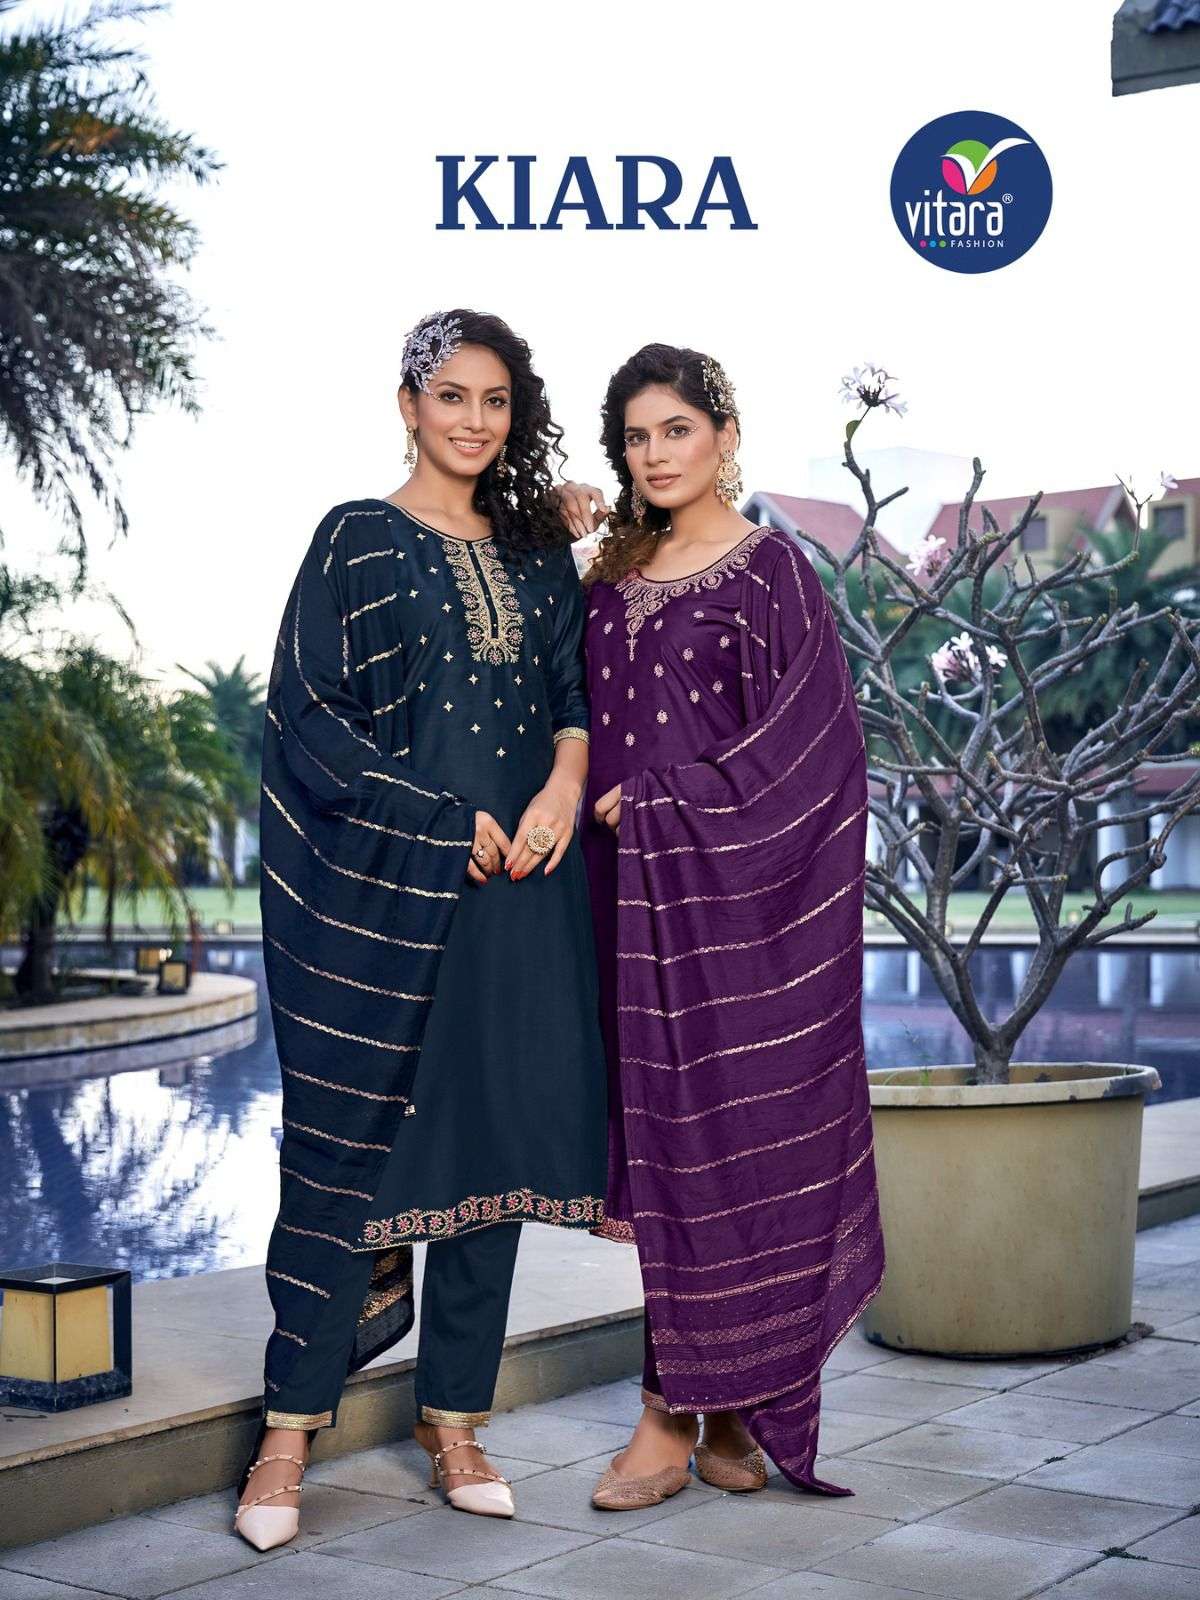 vitara fashion kiara 1001-1004 series exclusive designer kurtis catalogue online supplier surat 